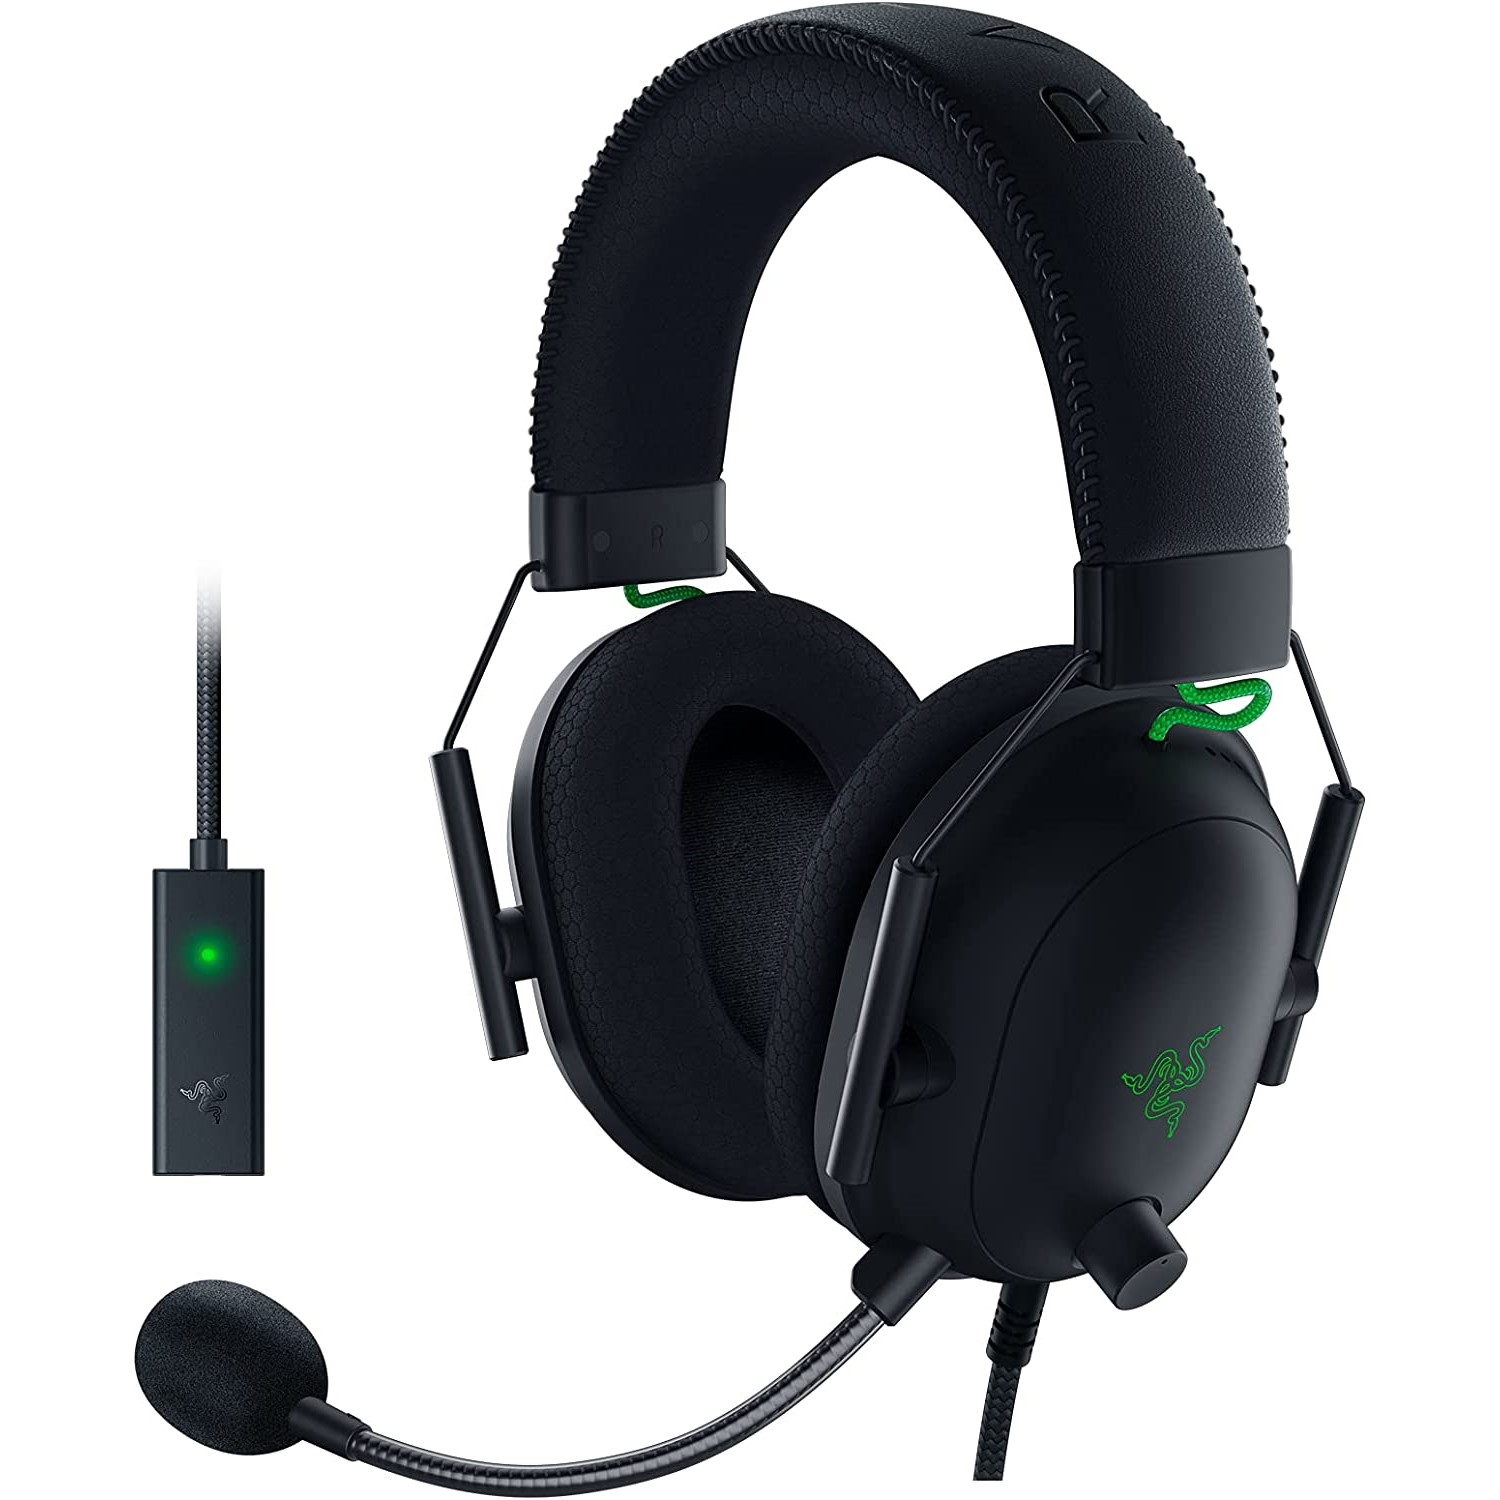 The Razer BlackShark V2, our favorite gaming headset, is just $70 on Amazon